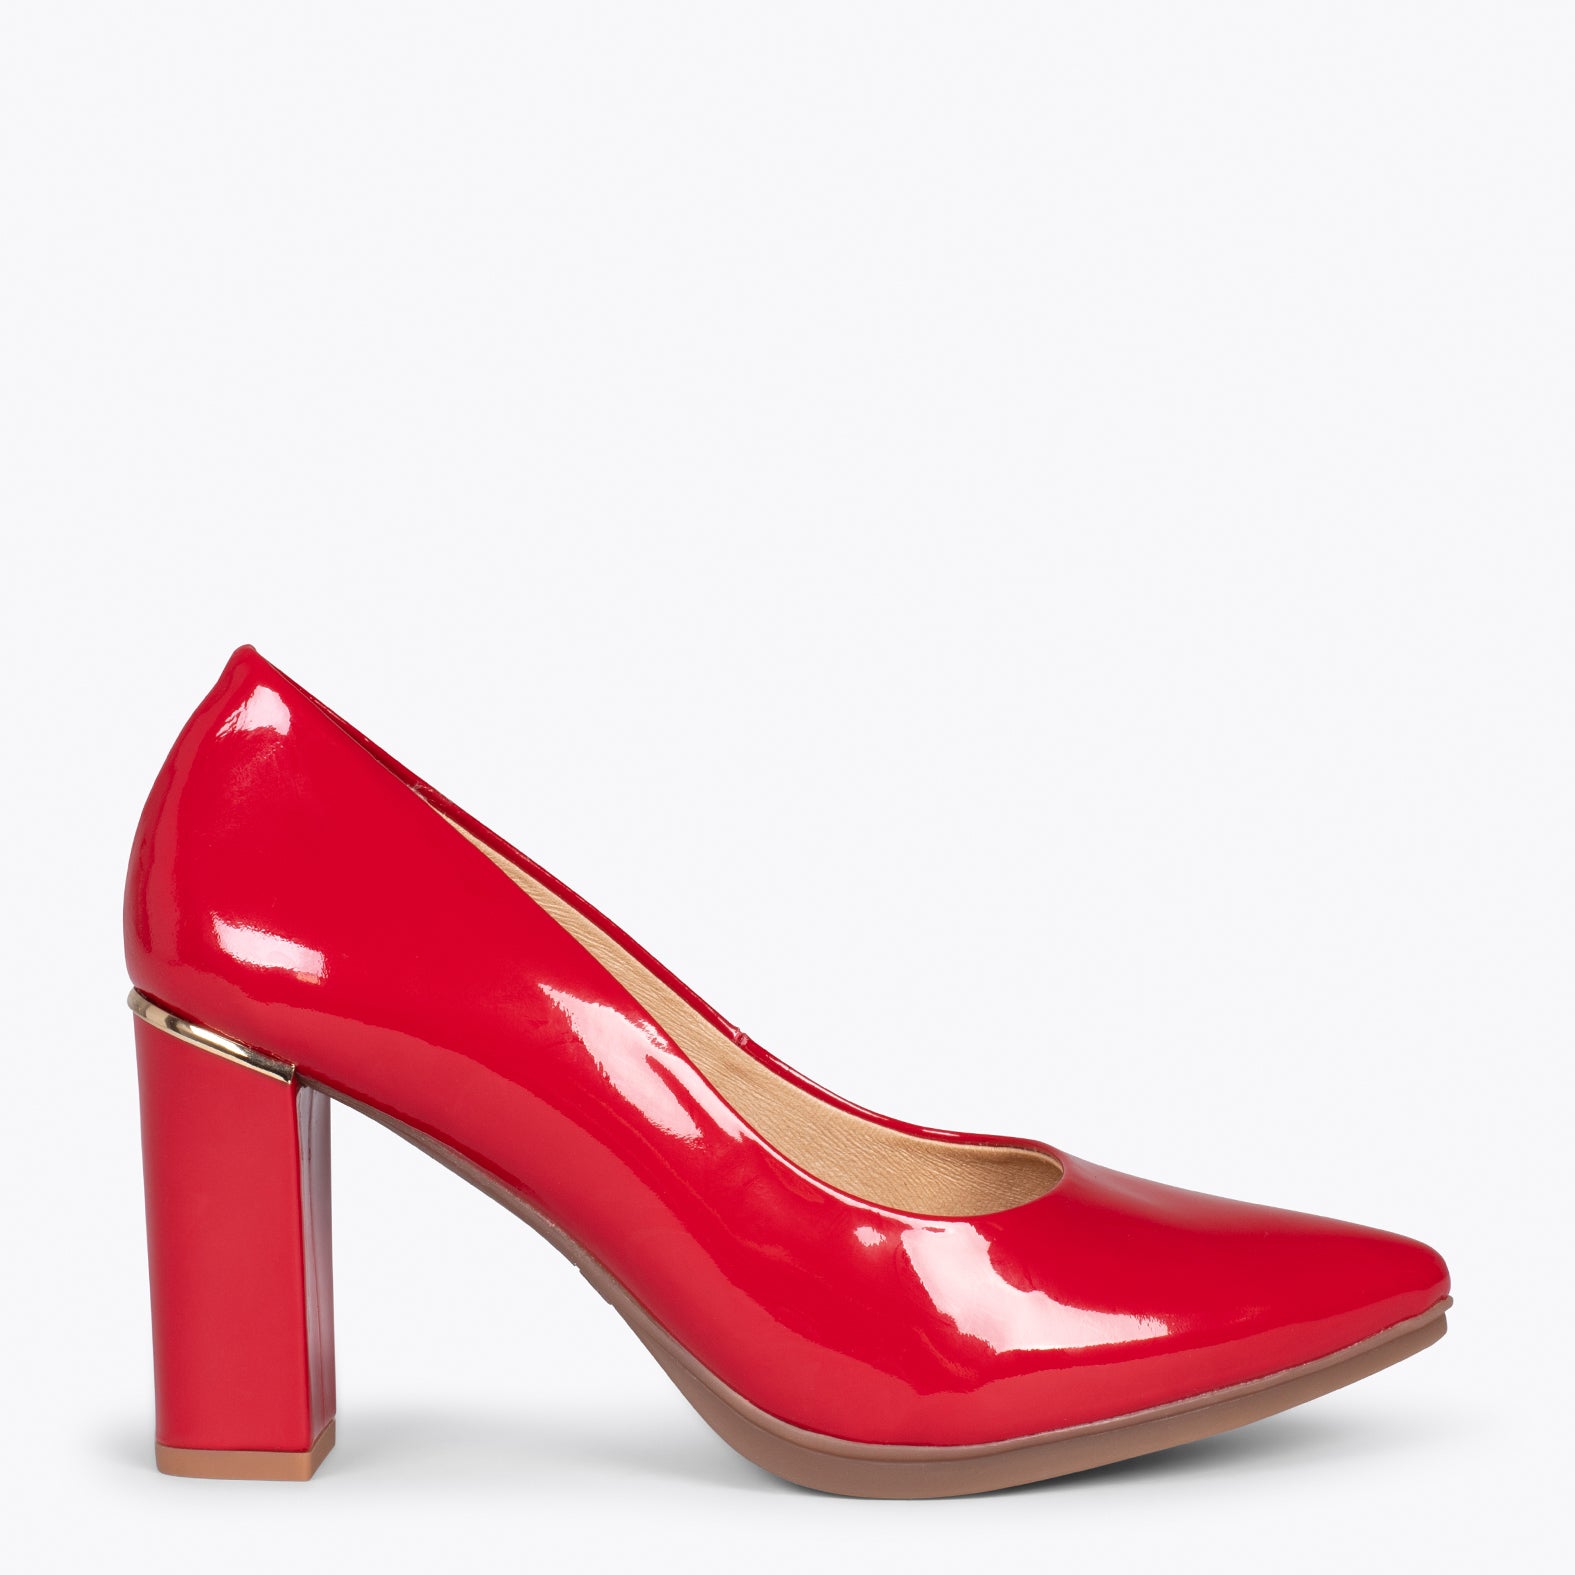 URBAN PATENT – RED patent high heels